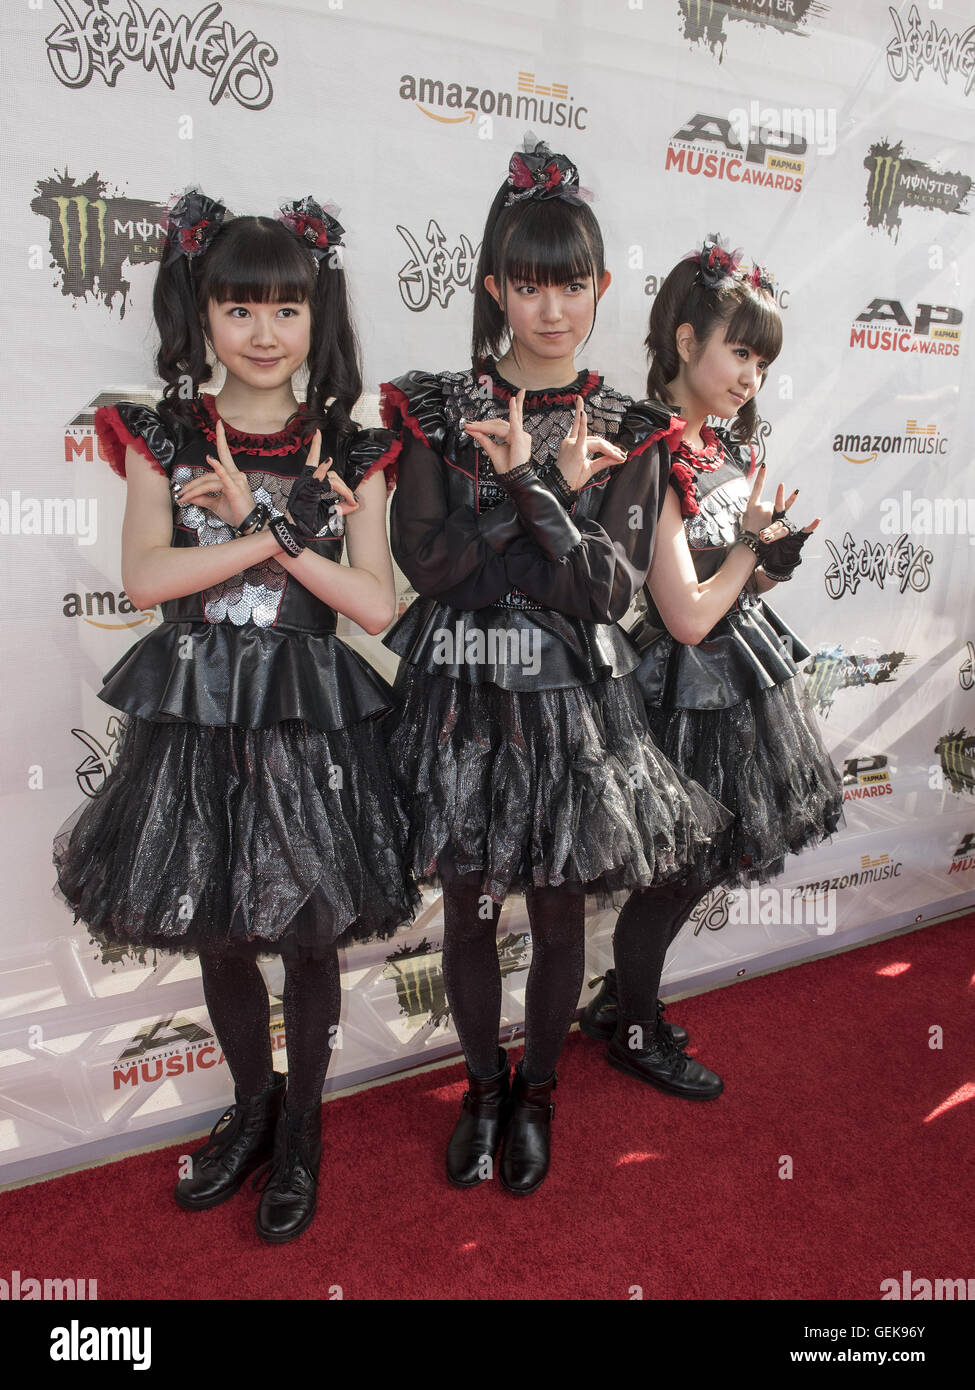 Columbus, OH, USA. 26th Apr, 2015. 18 July 2016 - Columbus, Ohio - Yui  Mizuno as ''Yuimetal'', Suzuka Nakamoto as ''Su-metal'' and Moa Kikuchi as  ''Moametal'' of the Japanese metal band Babymetal